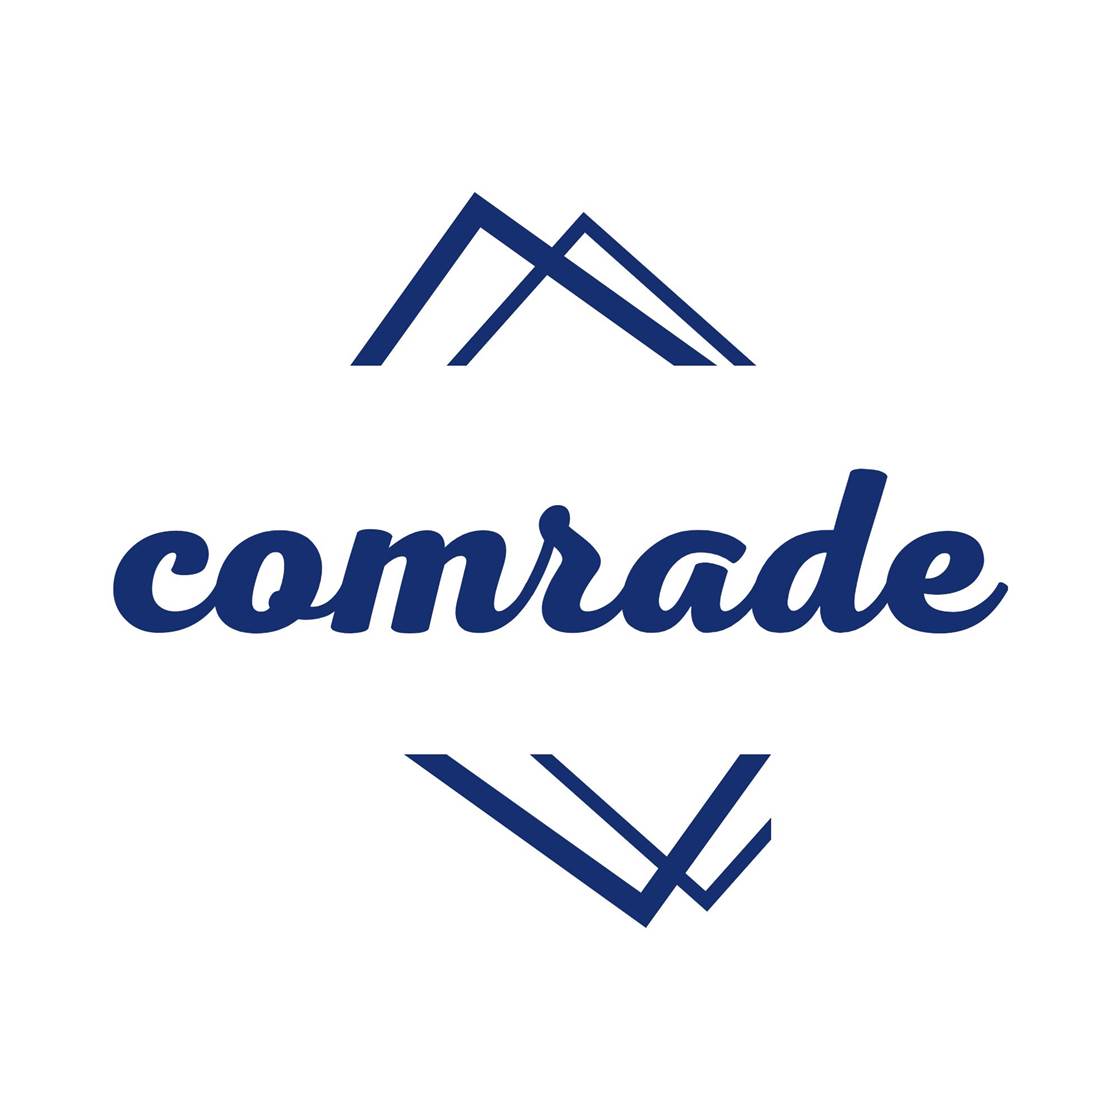 Bold, Serious, Internet Logo Design for Comrades in Arms, LLC товарищи в  оружии by Shank | Design #3122805